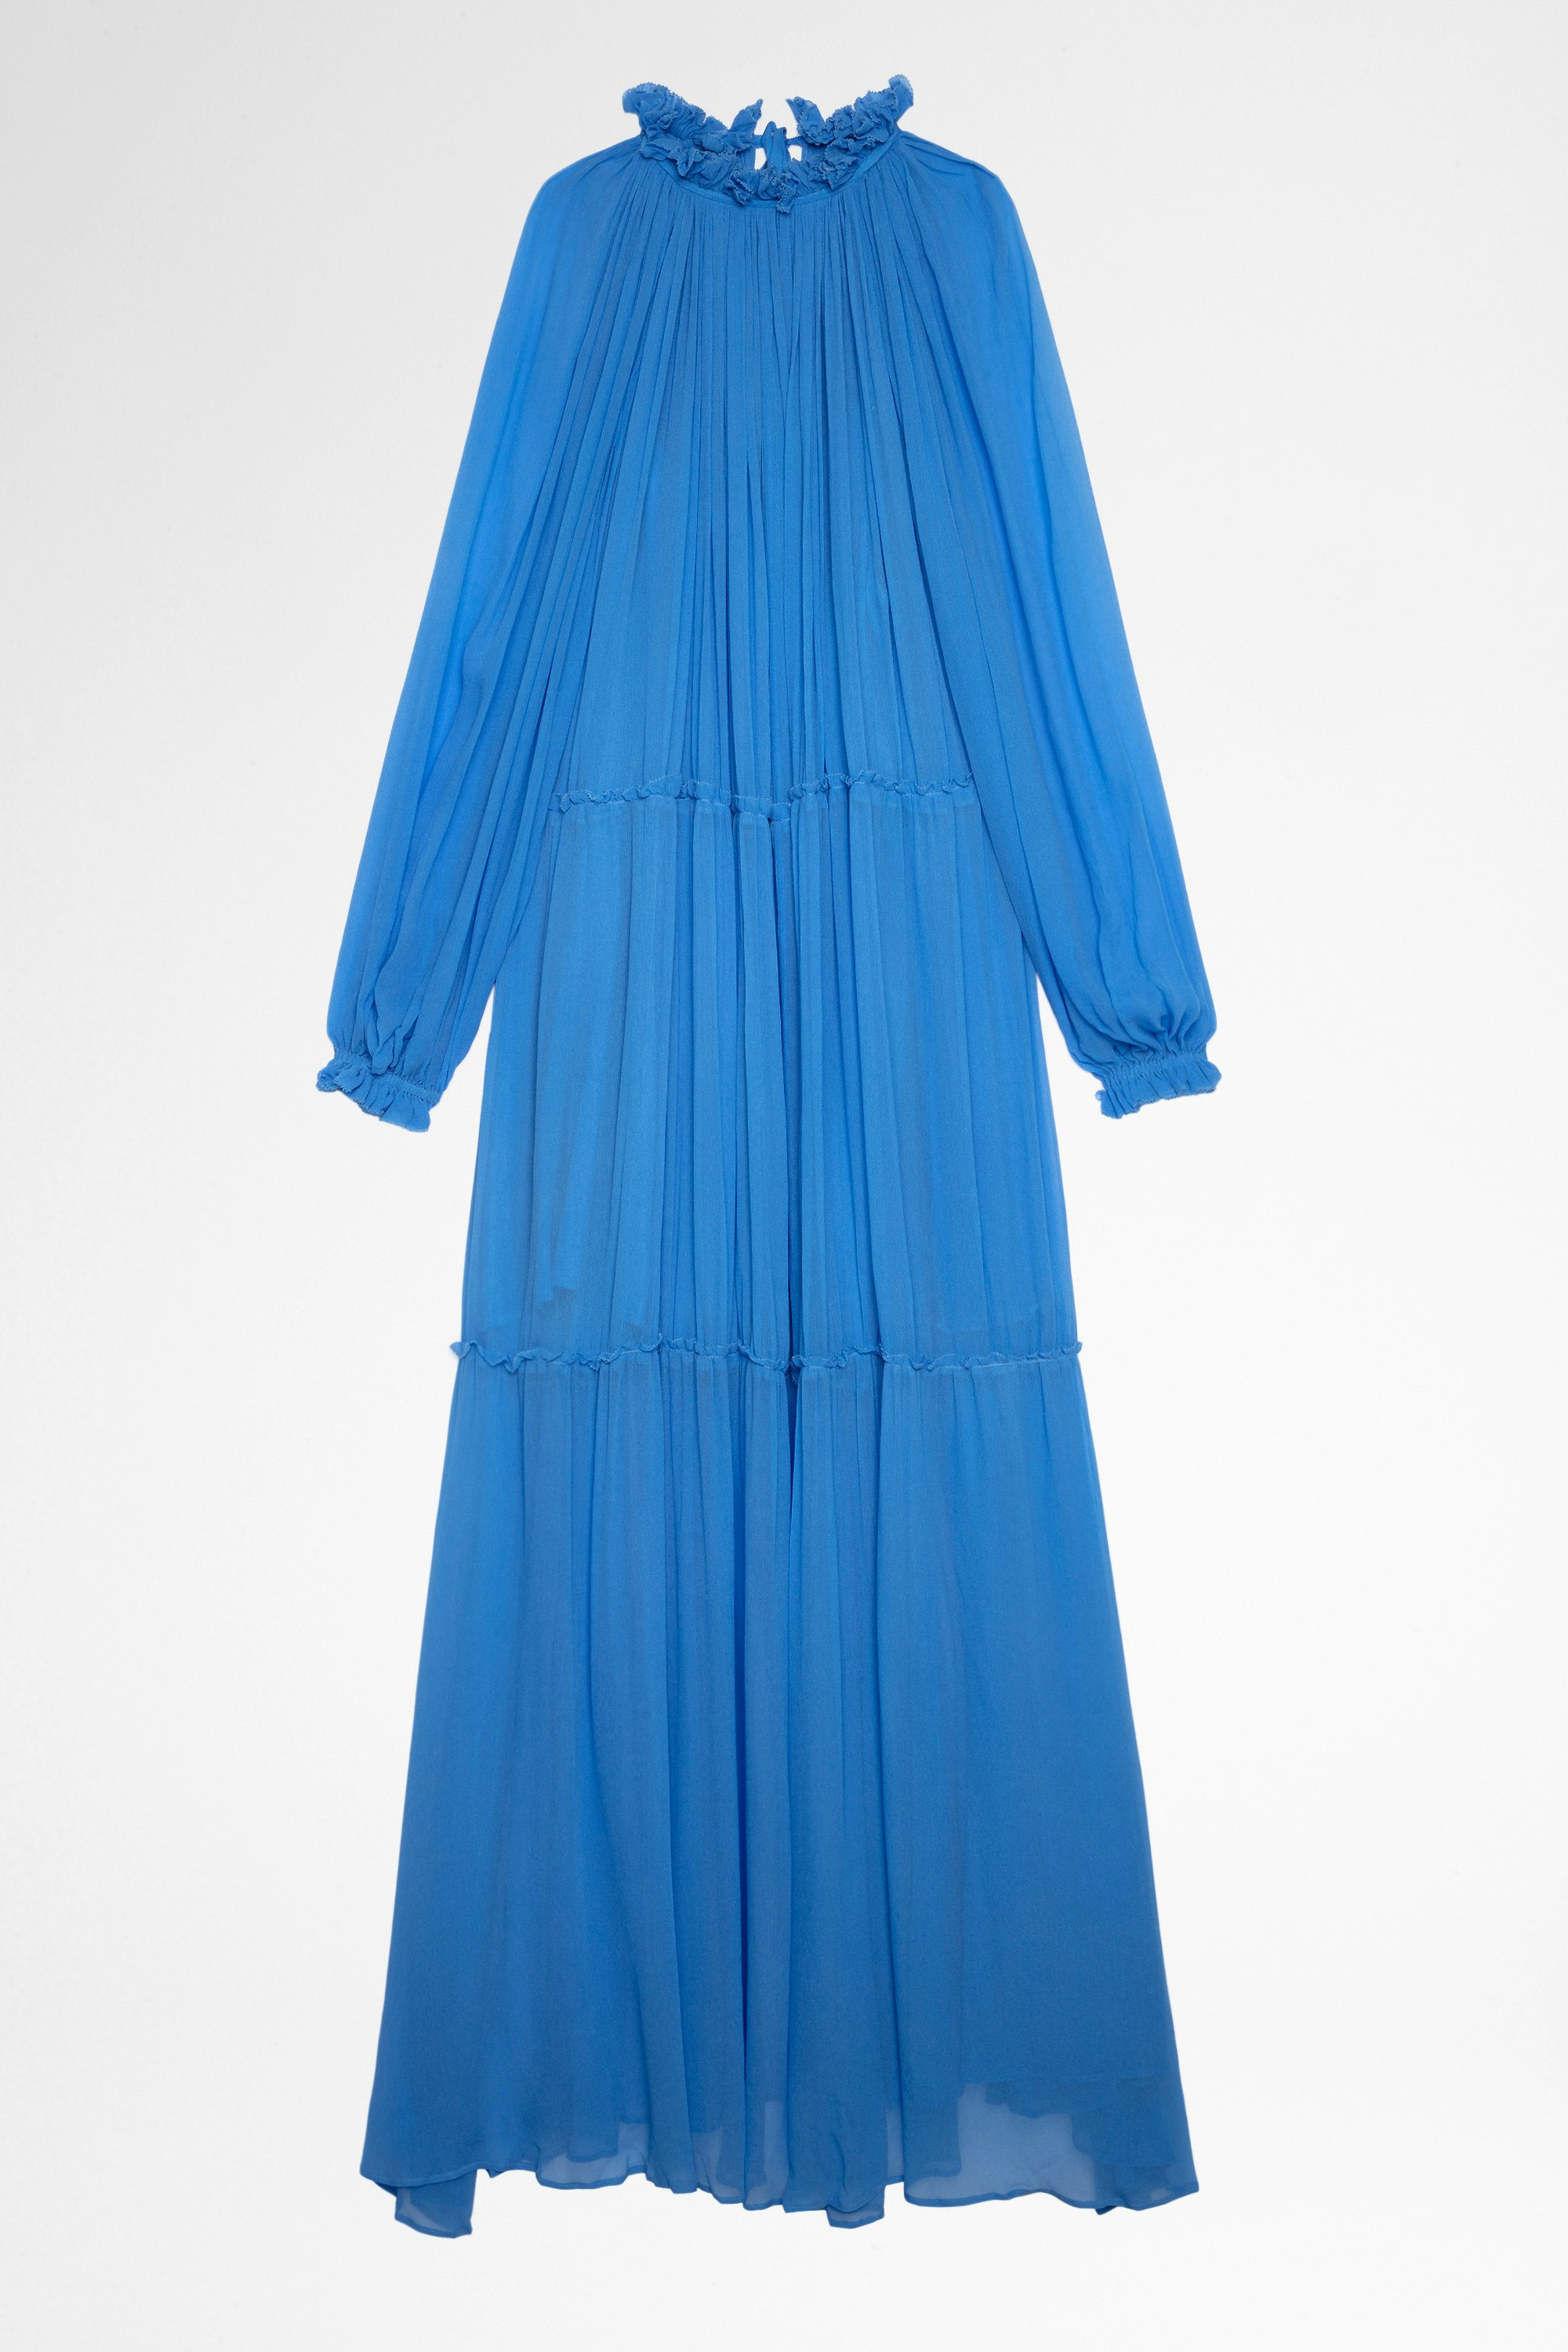 Vestido Razzia Vestido azul cielo largo de manga larga para mujer